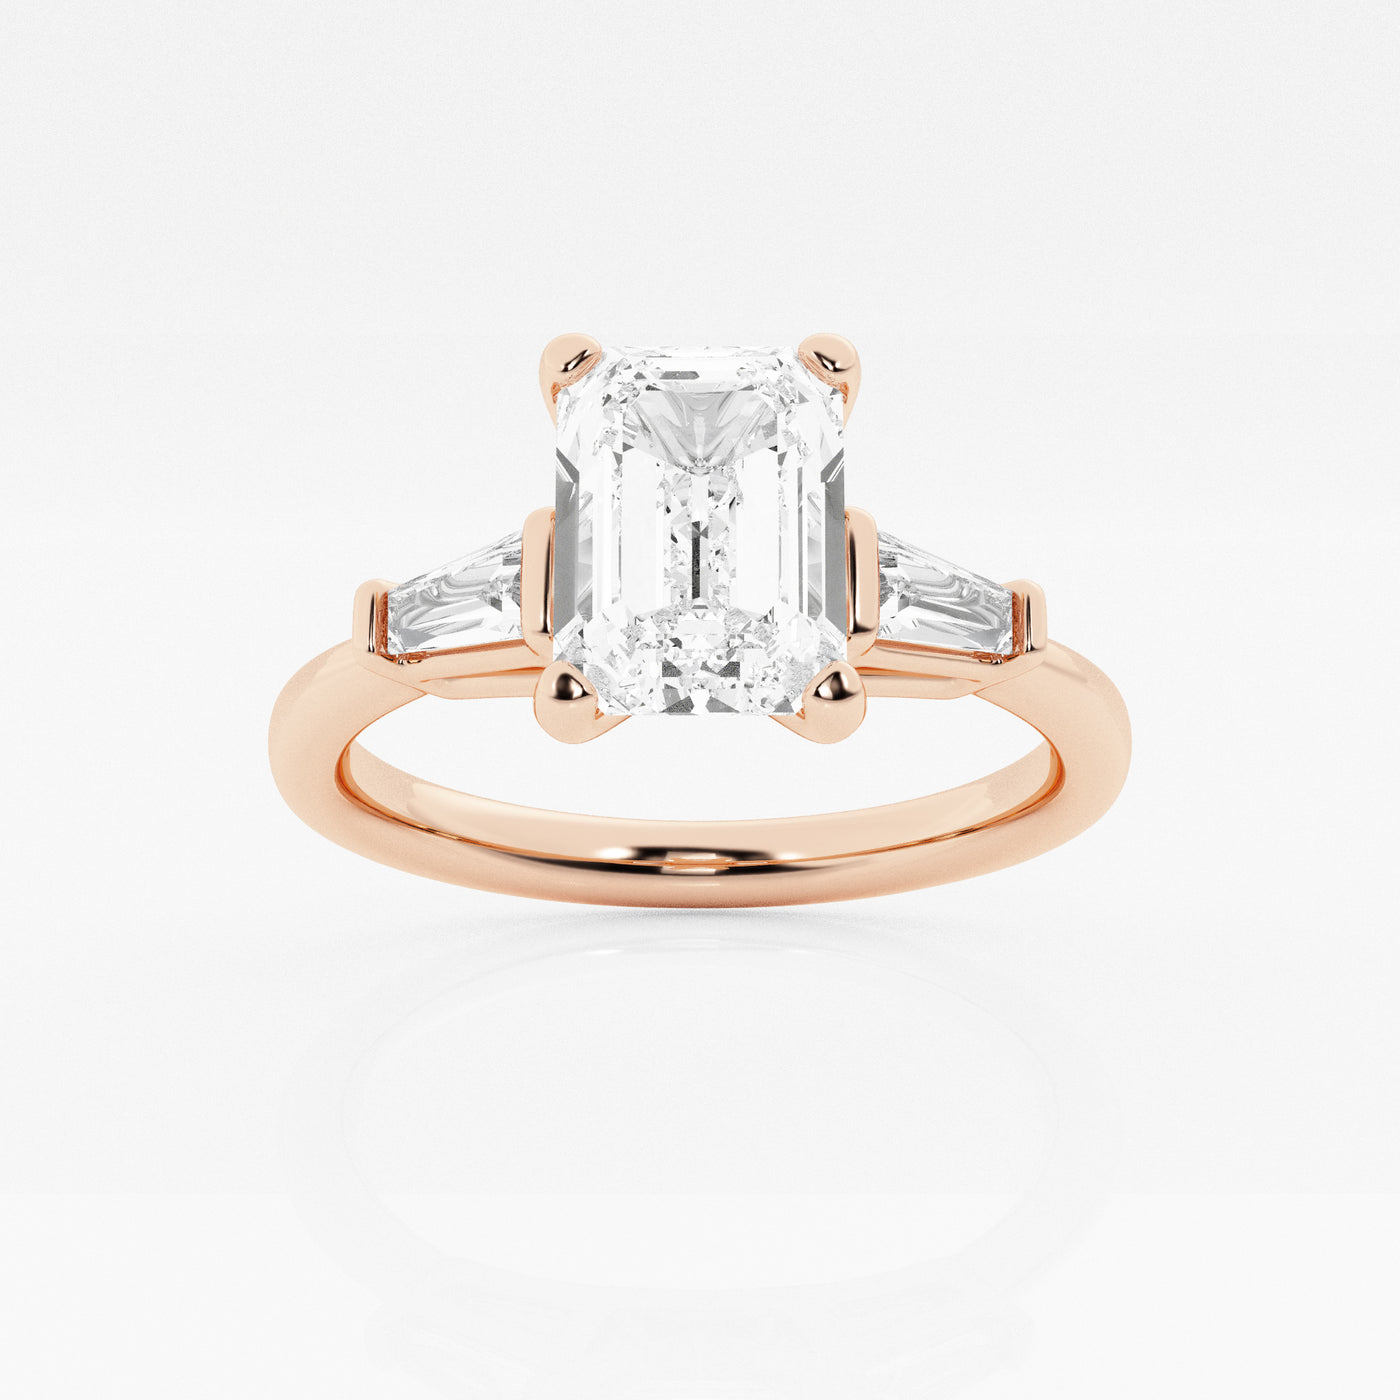 _main_image@SKU:LGR0617X3E200SOGS3~#carat_2.24#diamond-quality_def,-vs1+#metal_18k-rose-gold